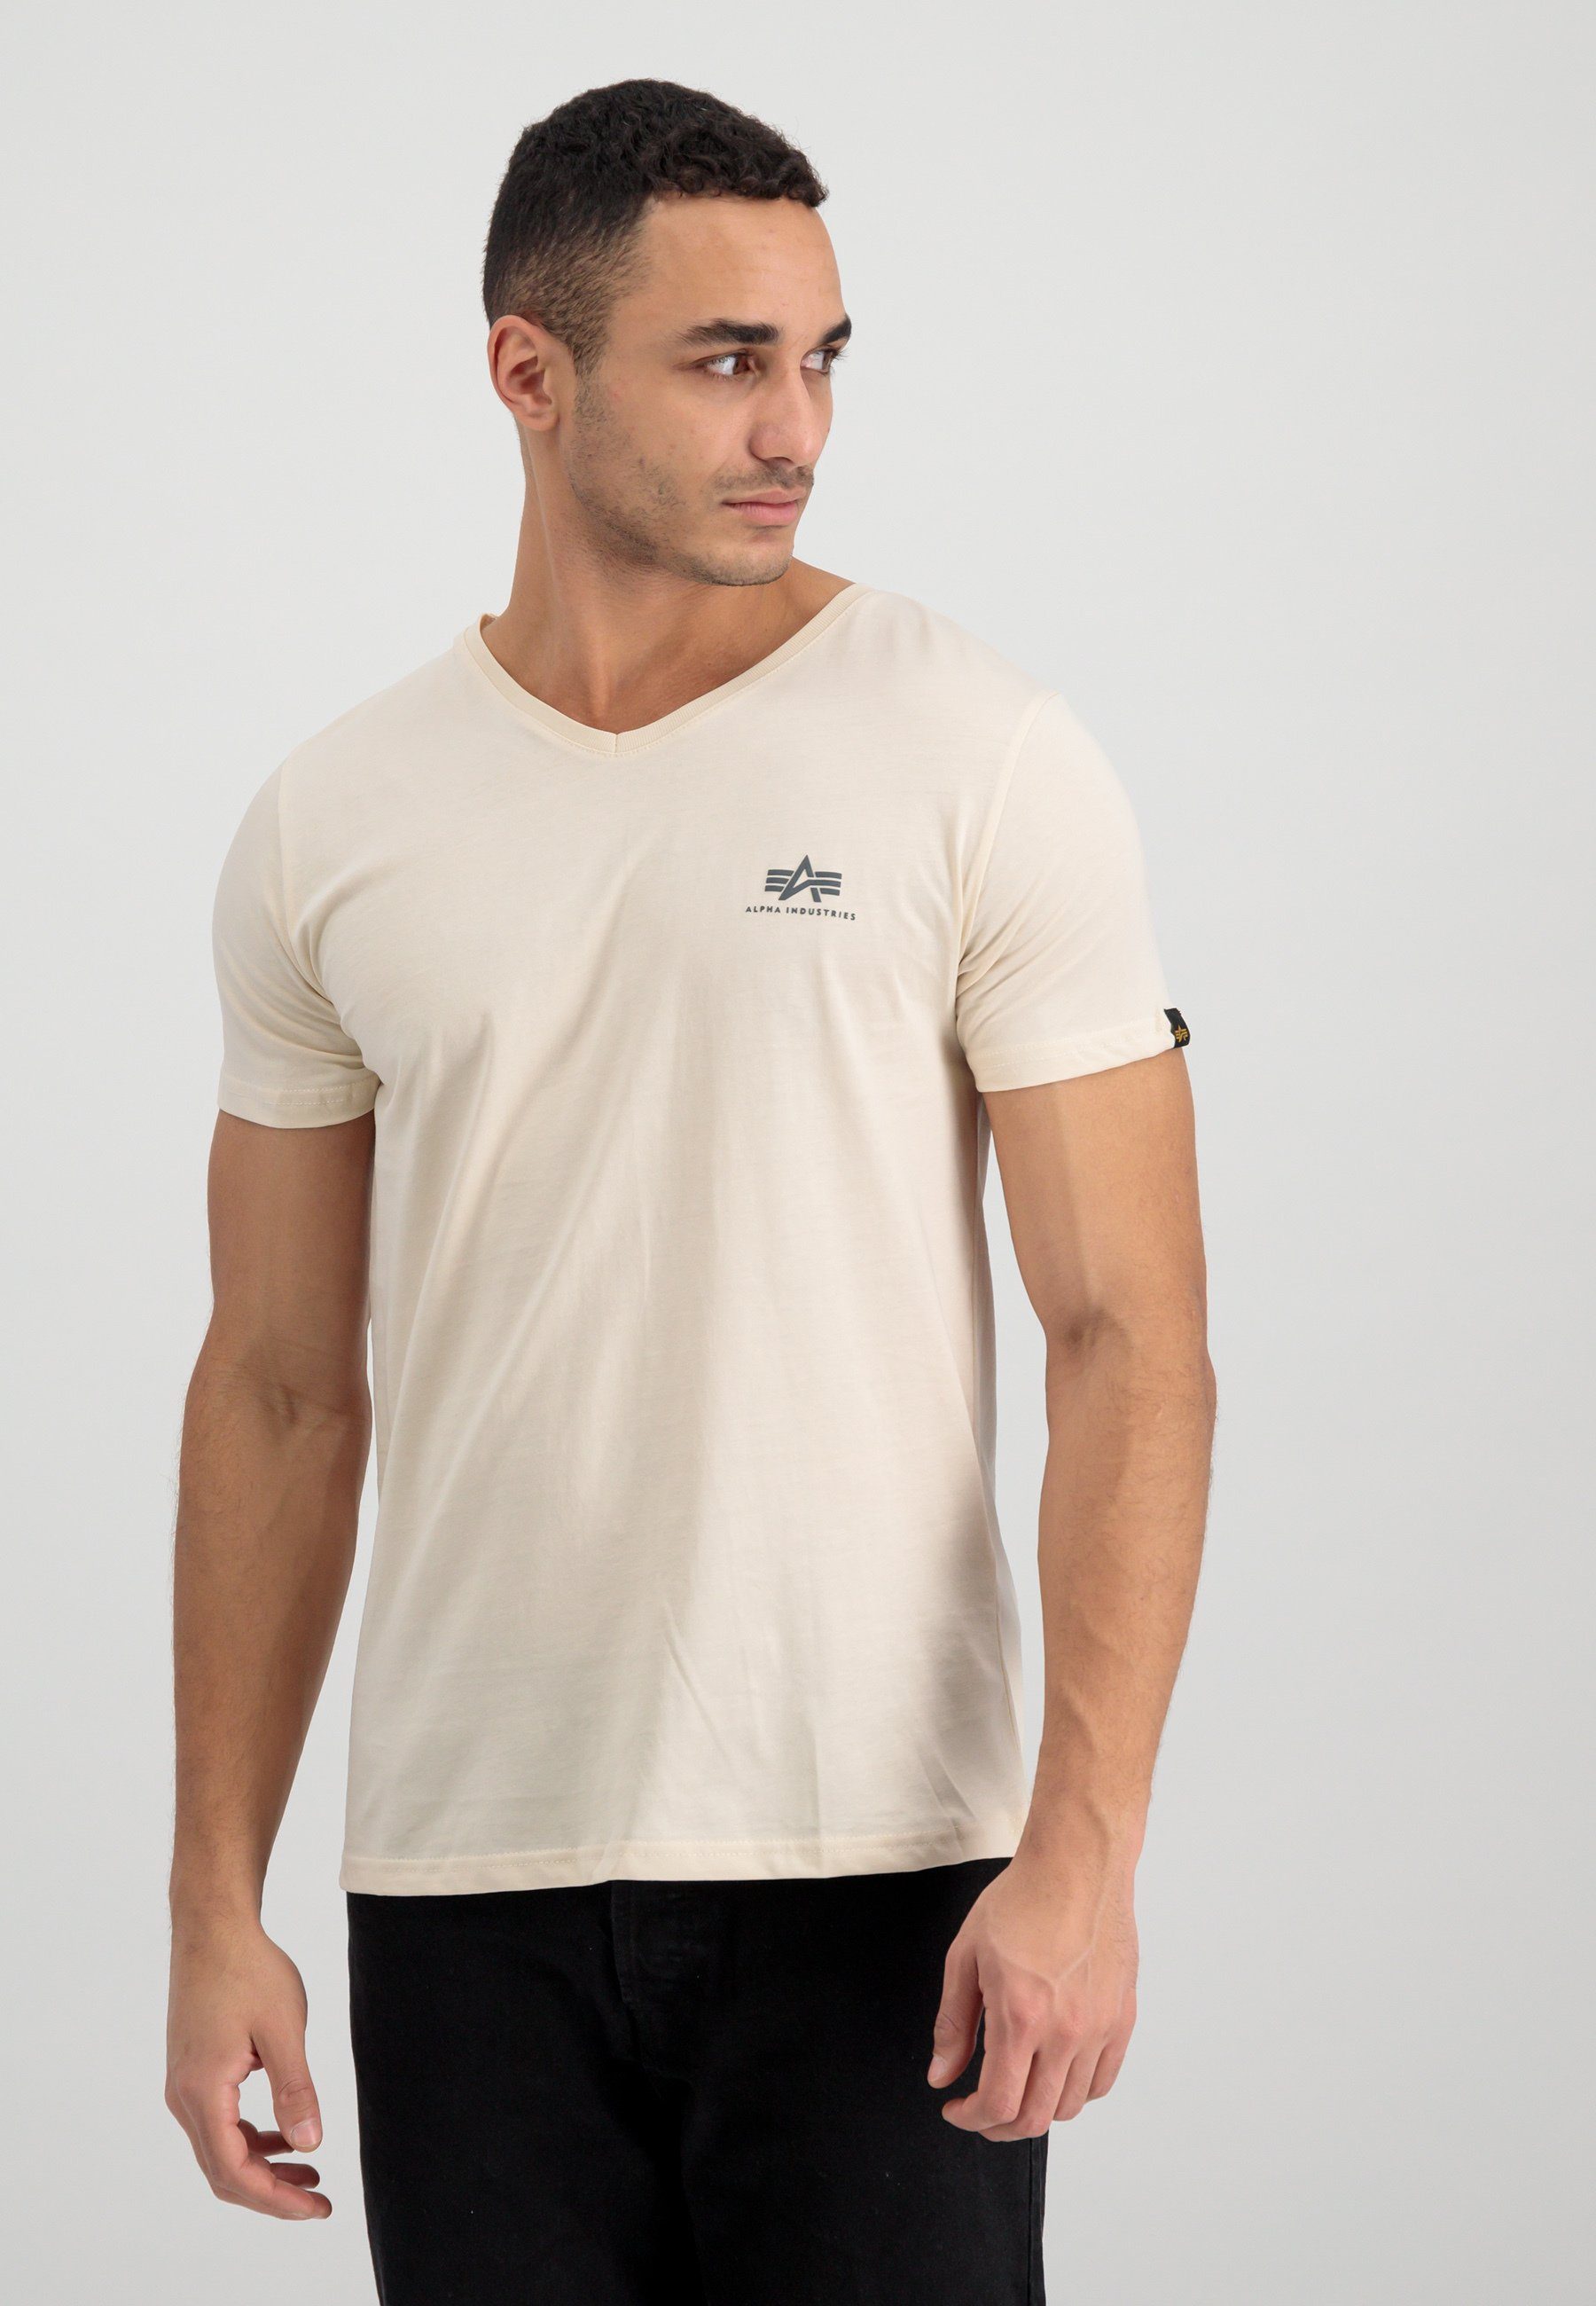 offizielle Verkaufsstelle Alpha Industries - Small T-Shirt V-Neck Men Basic T T-Shirts stream Logo Alpha white jet Industries